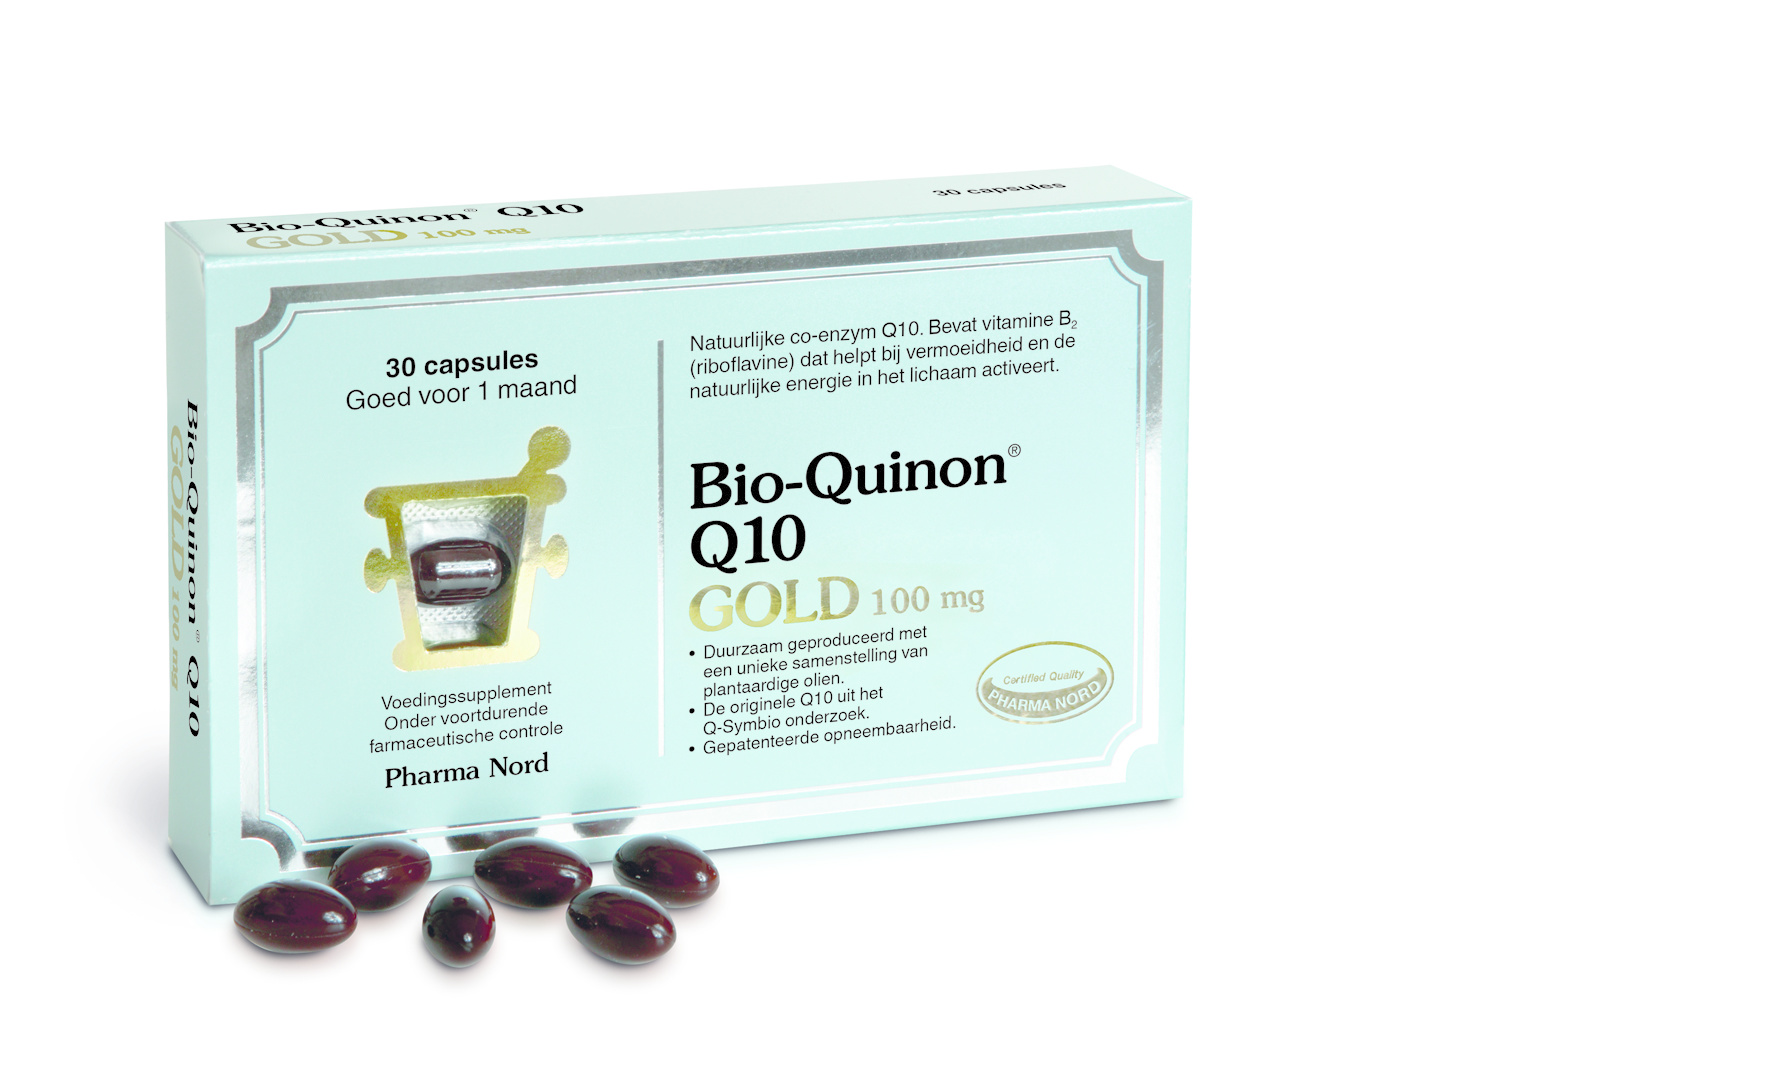 Pharma Nord Pharma Nord Bio quinon Q10 gold 100 mg (30 caps)